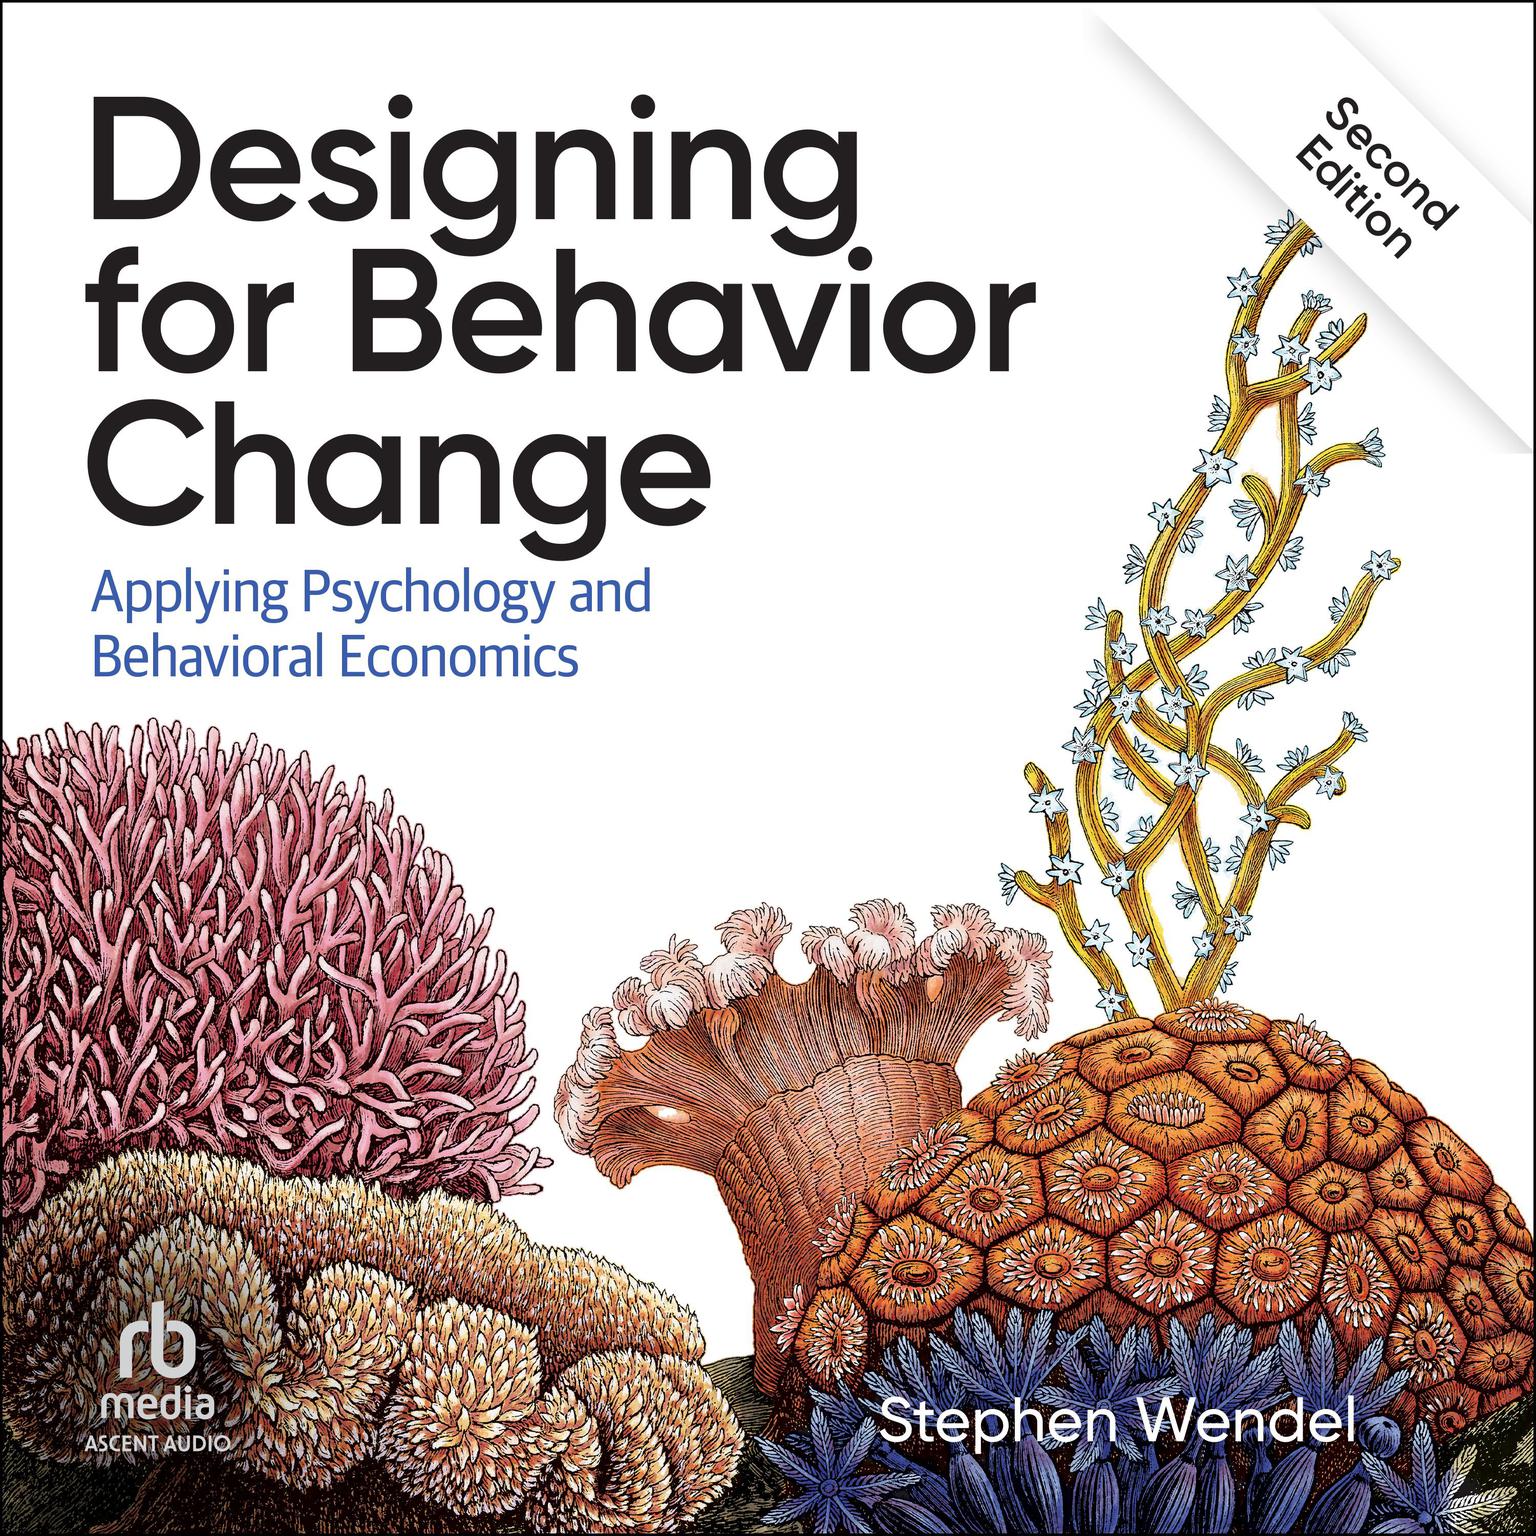 Designing for Behavior Change: Applying Psychology and Behavioral Economics 2nd Edition Audiobook, by Stephen Wendel